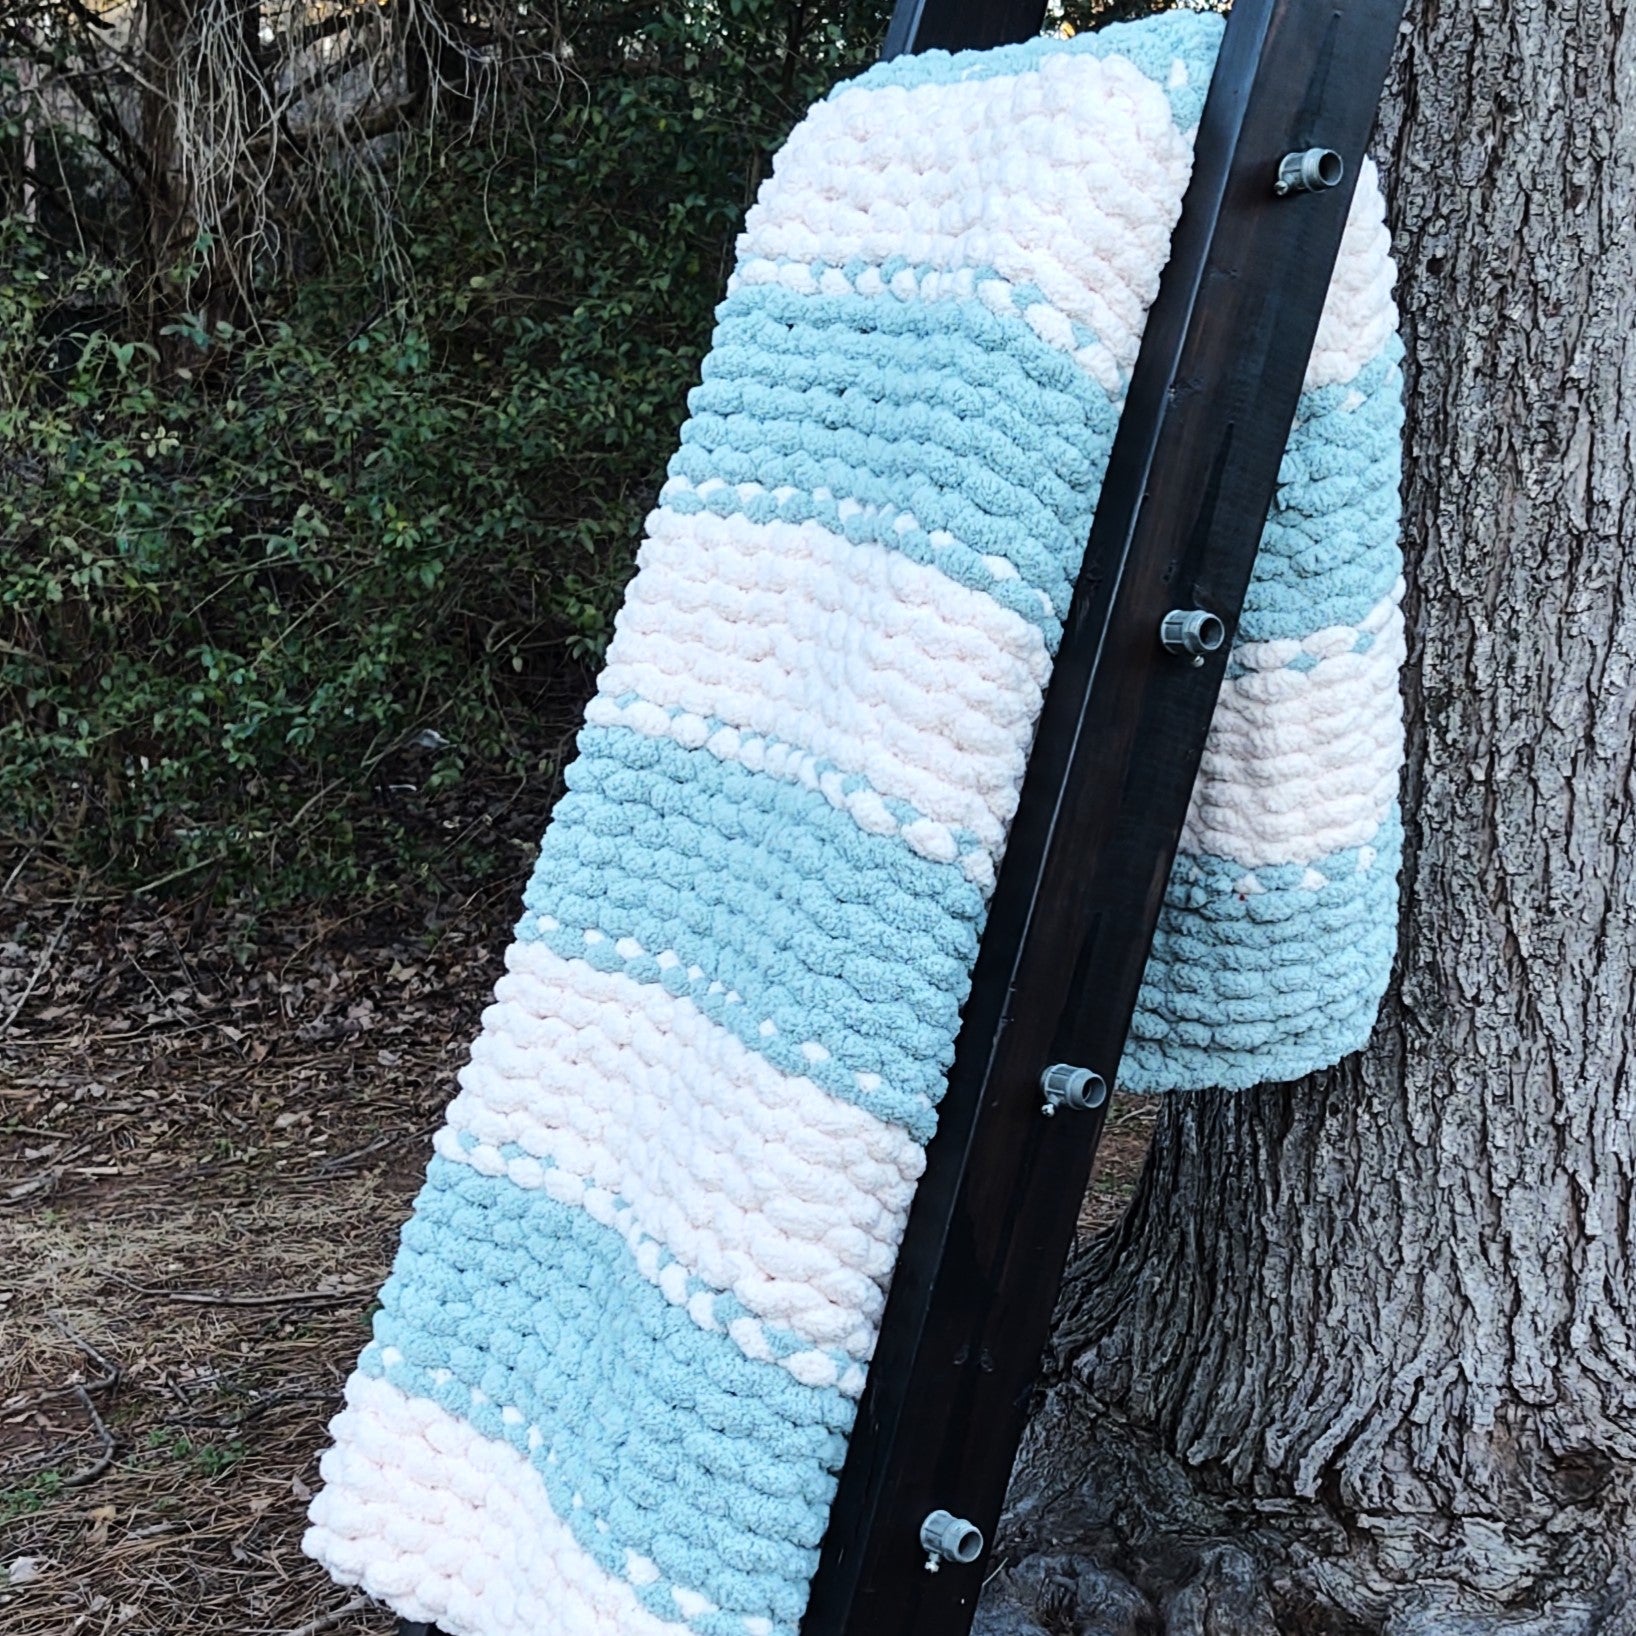 Handmade Chunky Knit Throw Blanket - PREORDER